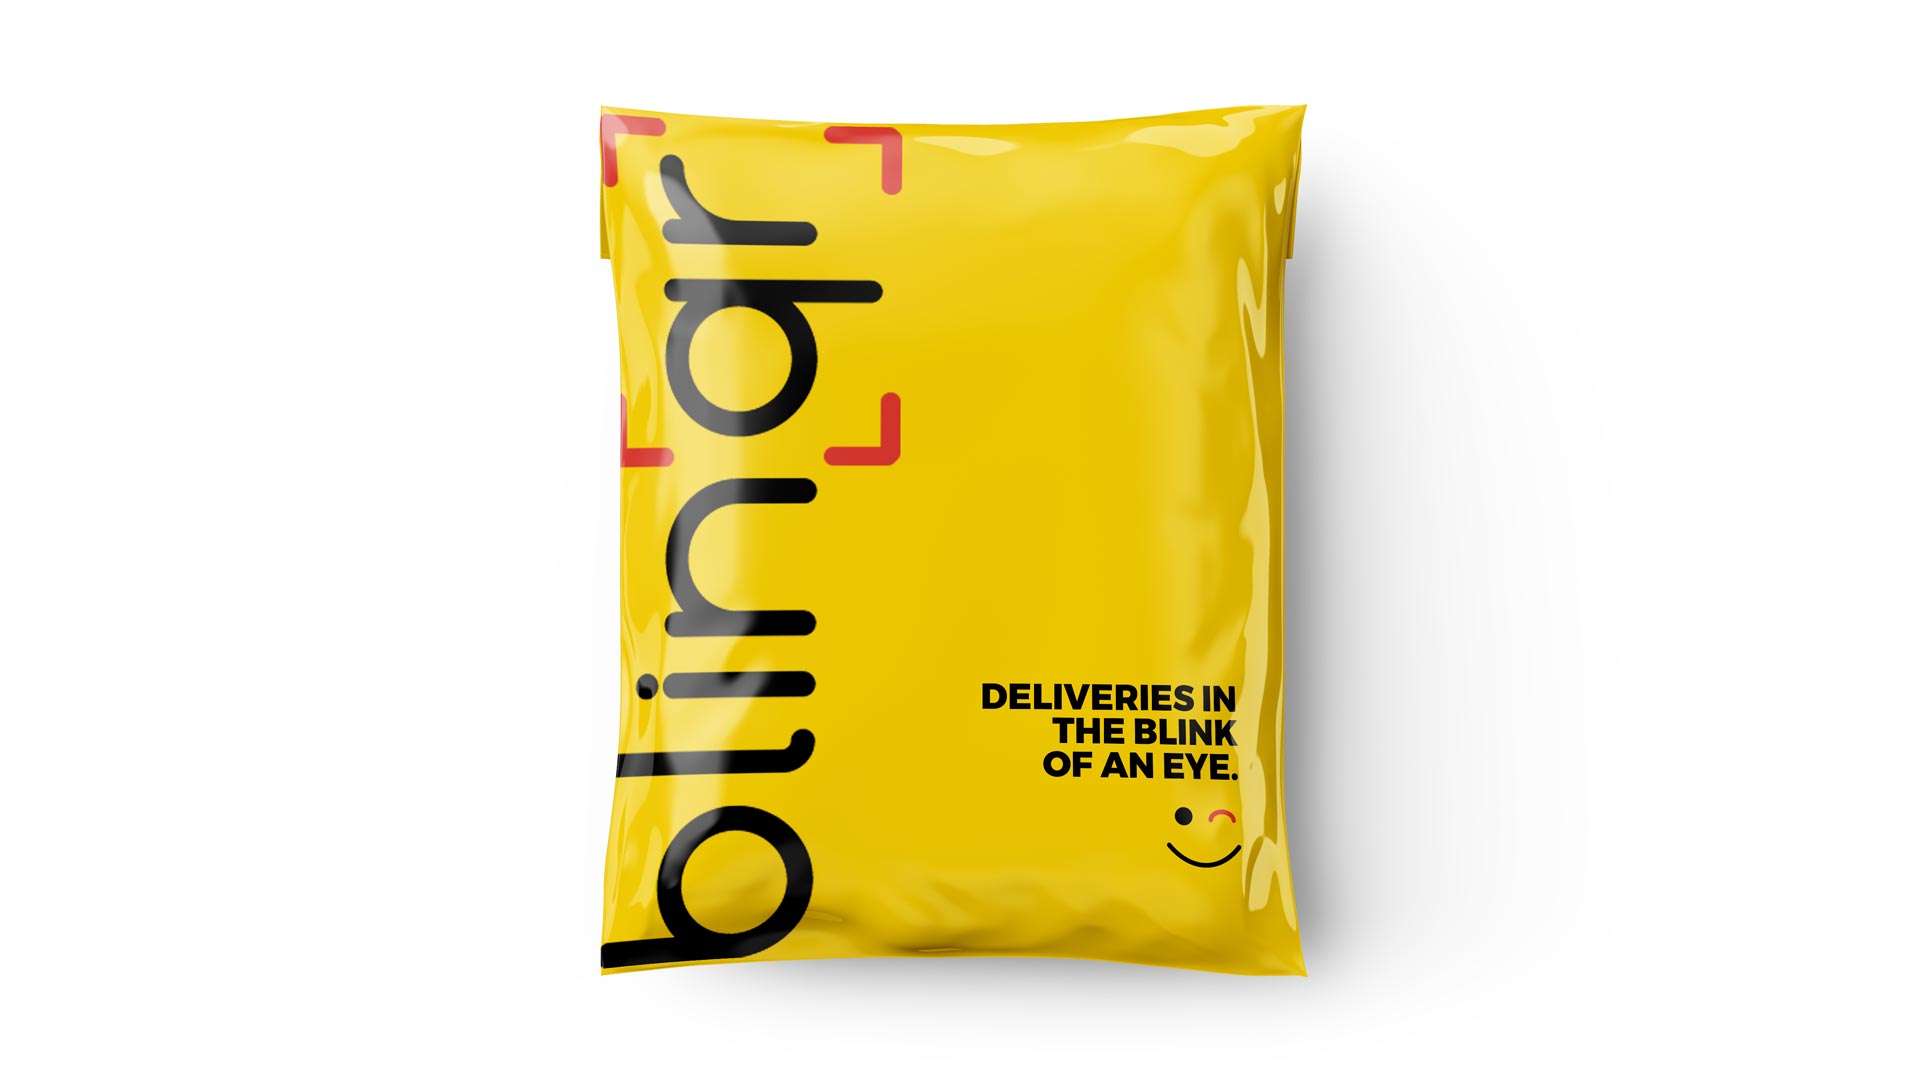 Blinqr Parcel Packaging Design